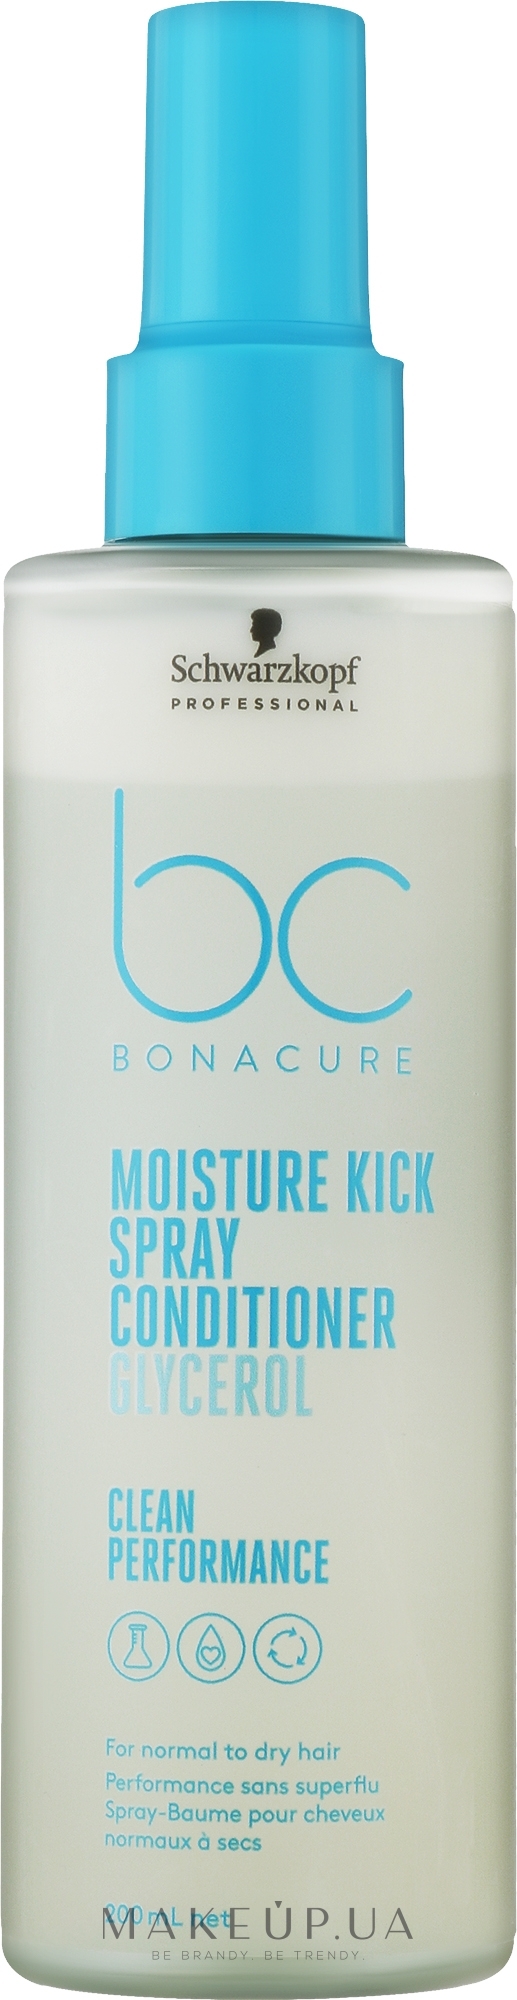 Спрей-кондиционер для волос - Schwarzkopf Professional Bonacure Moisture Kick Spray Conditioner Glycerol — фото 200ml